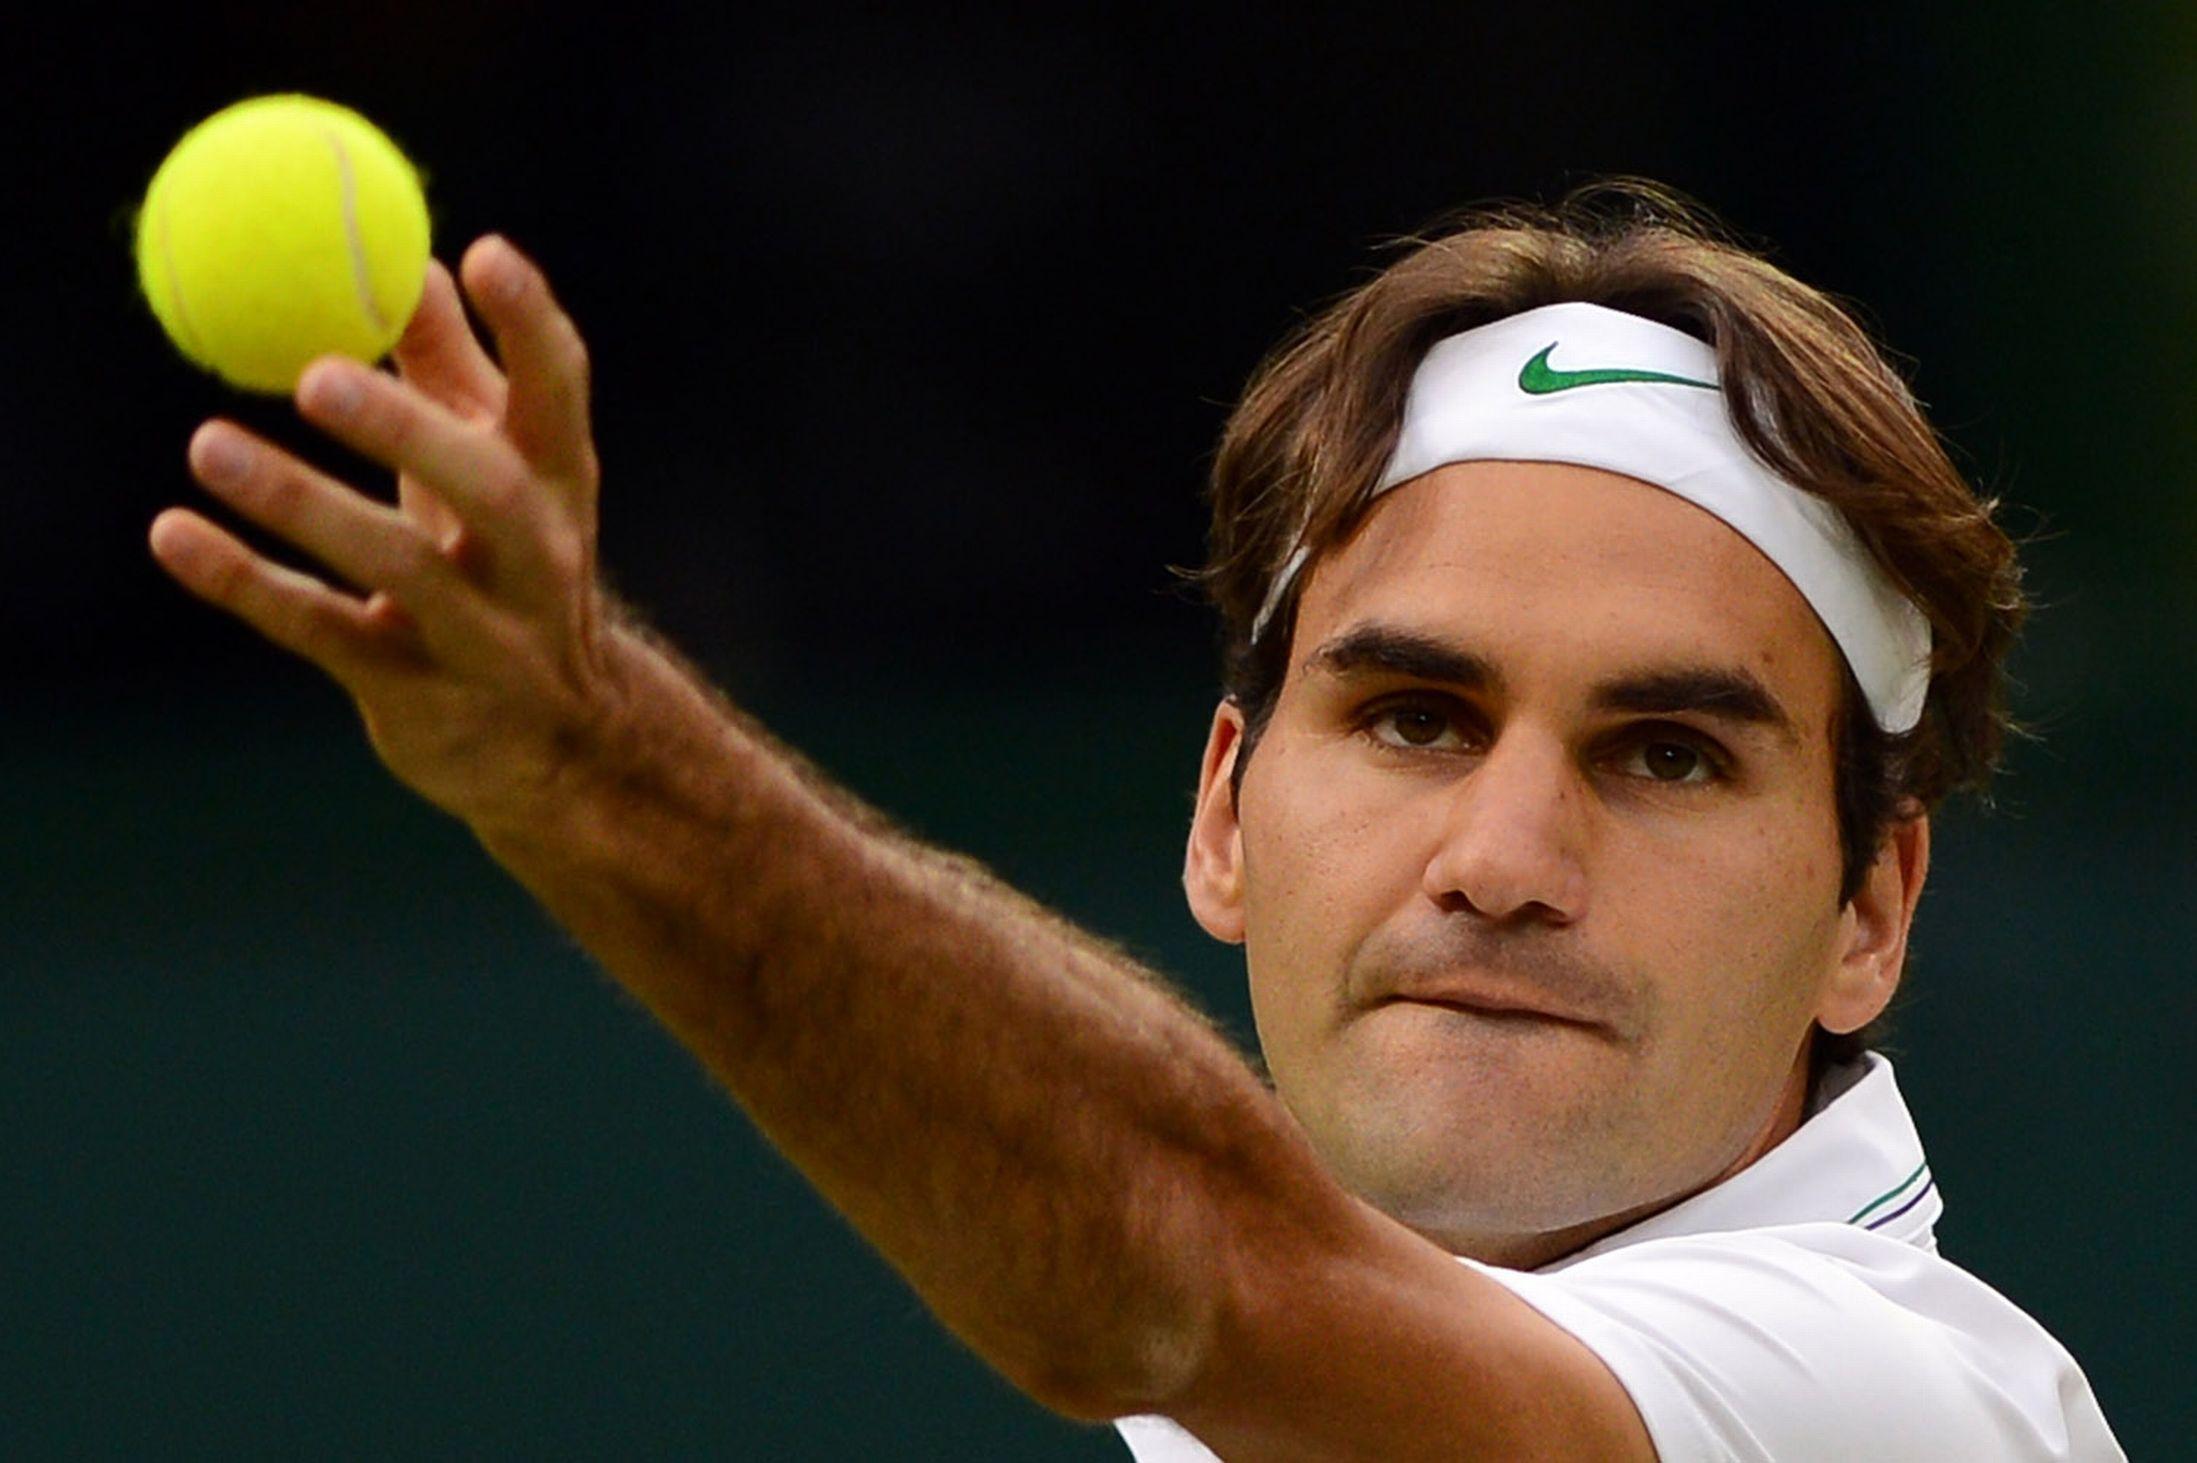 Roger Federer Wallpaper Image Photo Picture Background